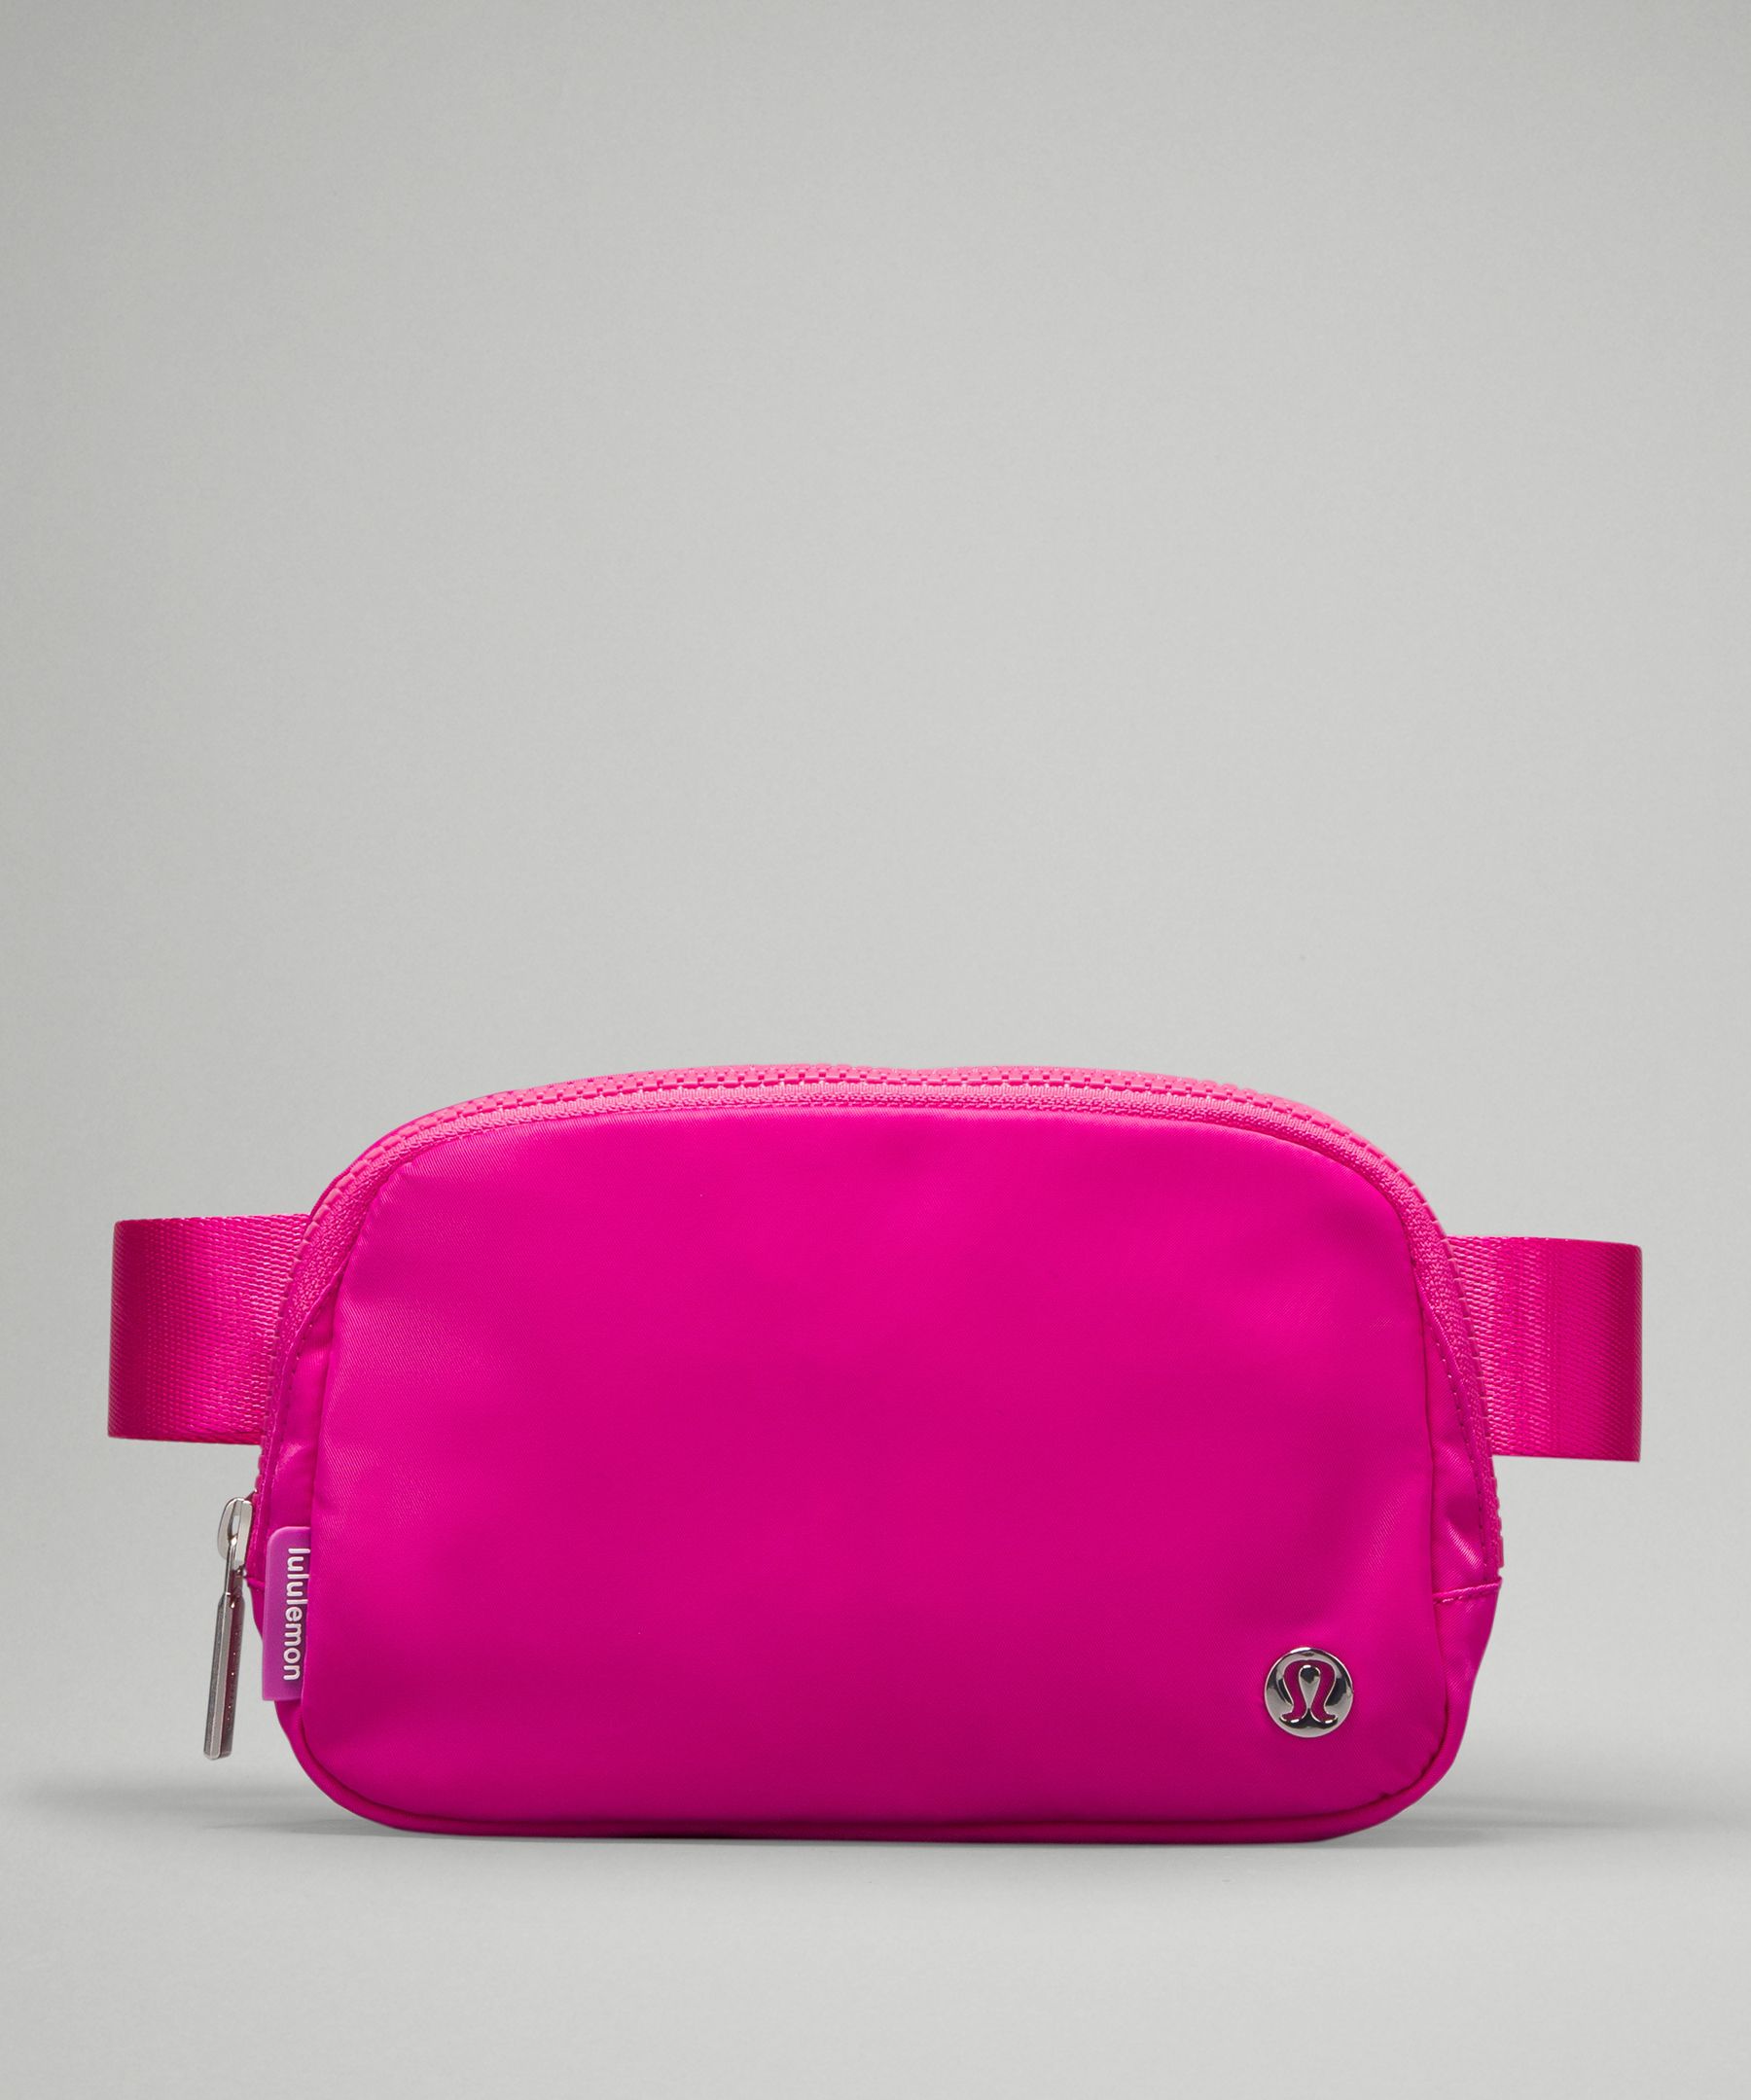 Lululemon Easy Access Crossbody Bag 1.5L - Pink/Khaki